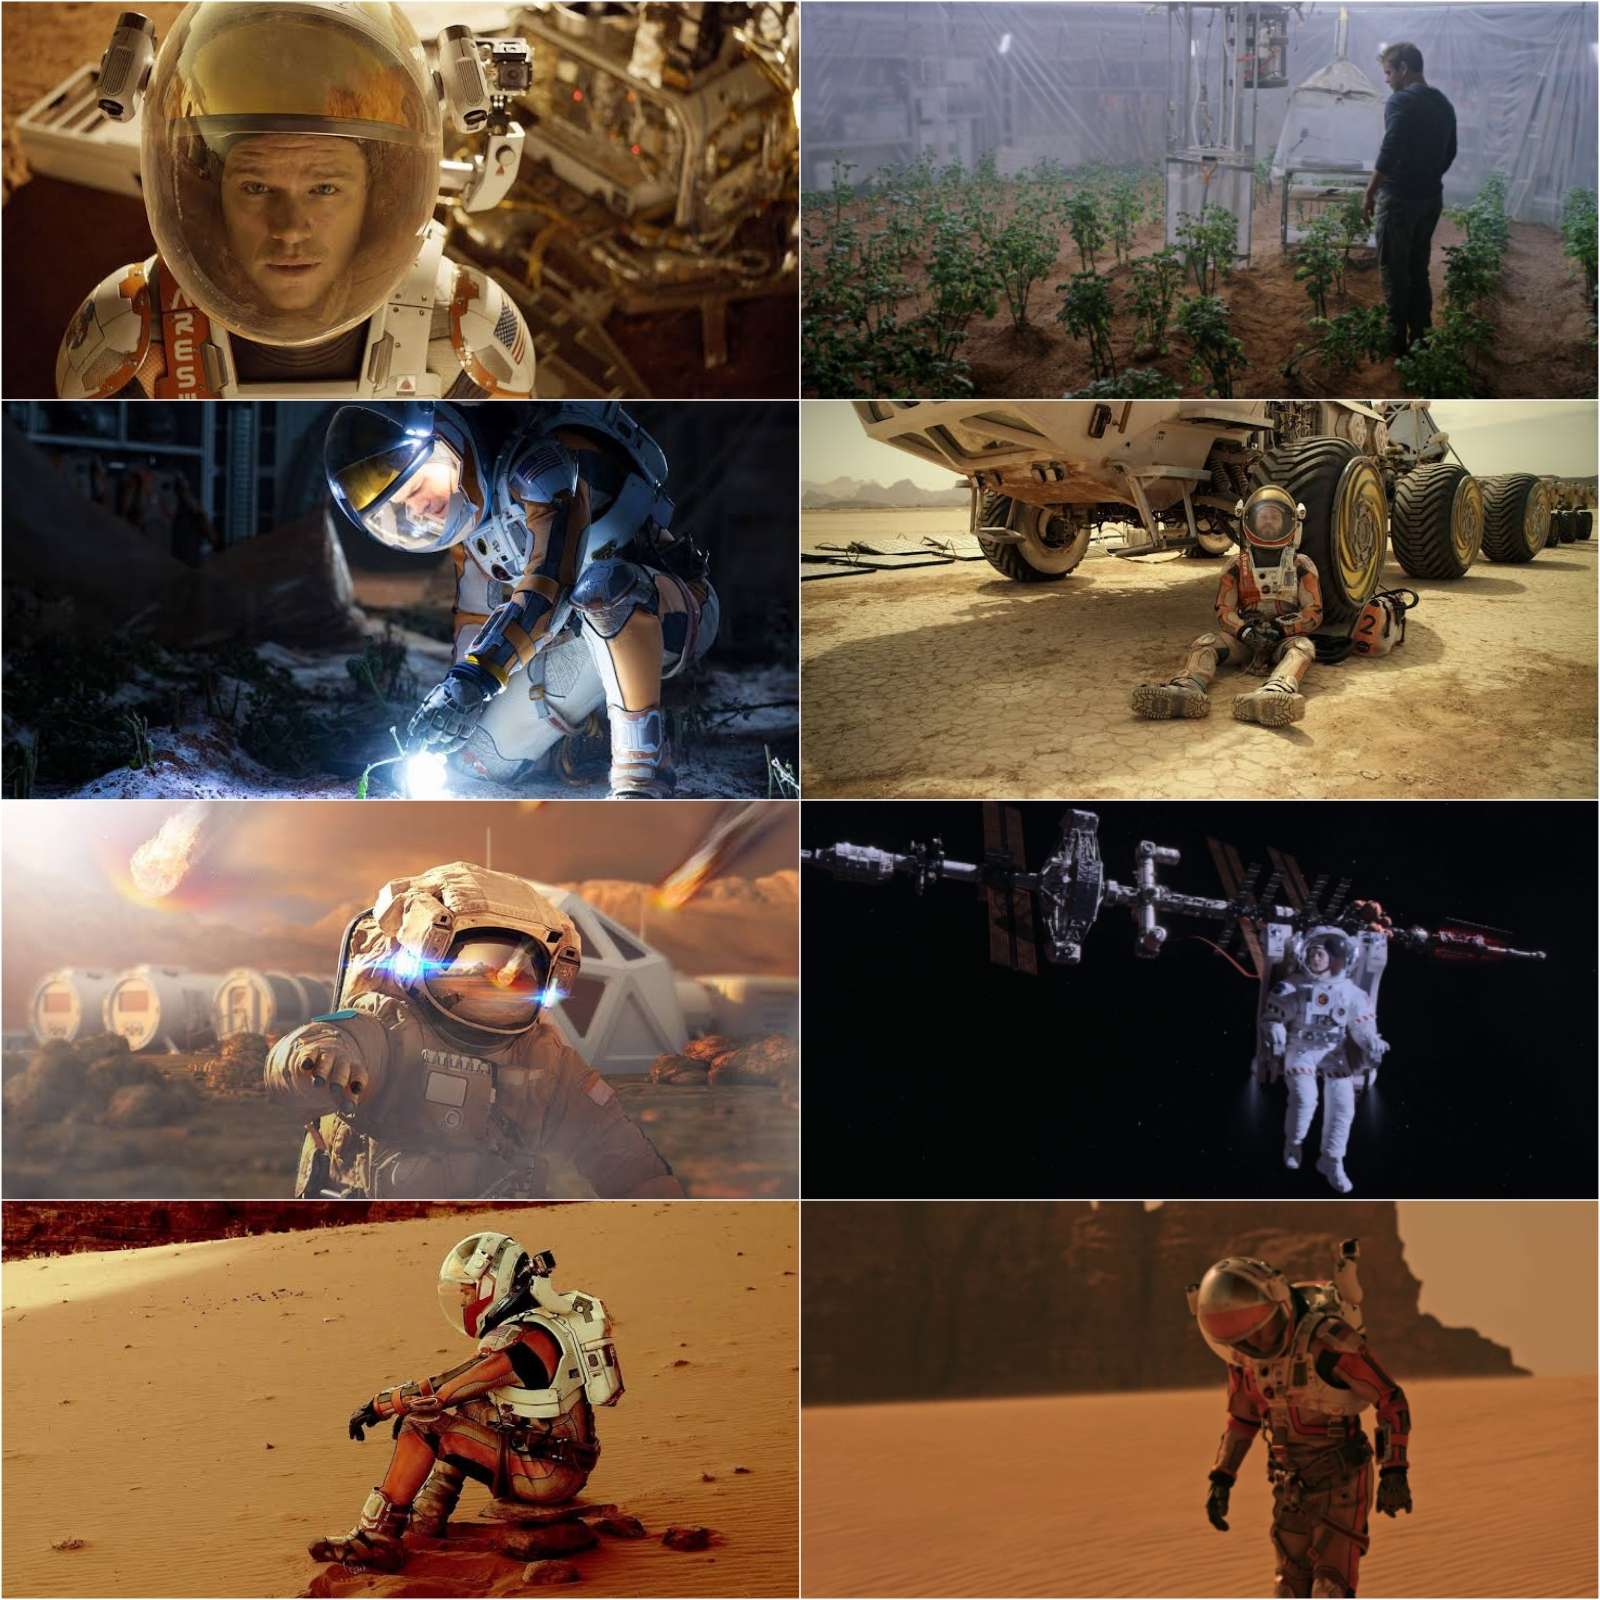  Screenshot Of The-Martian-2015-BluRay-Dual-Audio-Hindi-And-English-Hollywood-Hindi-Dubbed-Full-Movie-Download-In-Hd